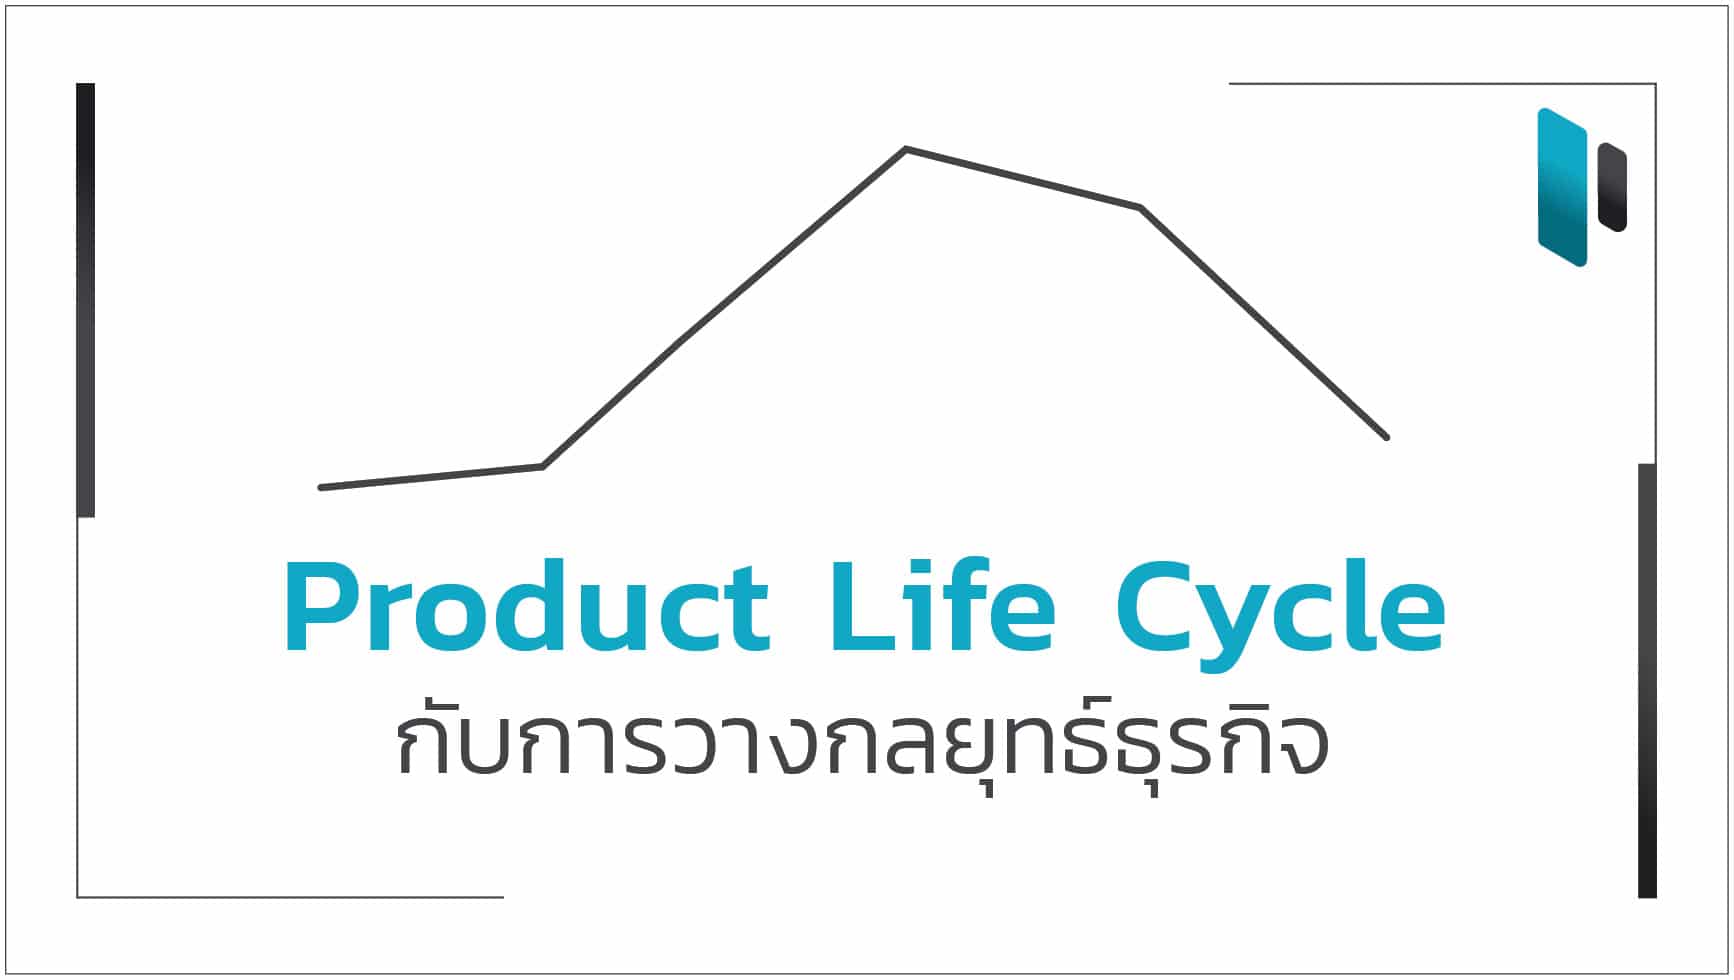 Product Life Cycle กับการวางกลยุทธ์ธุรกิจ – Popticles.Com